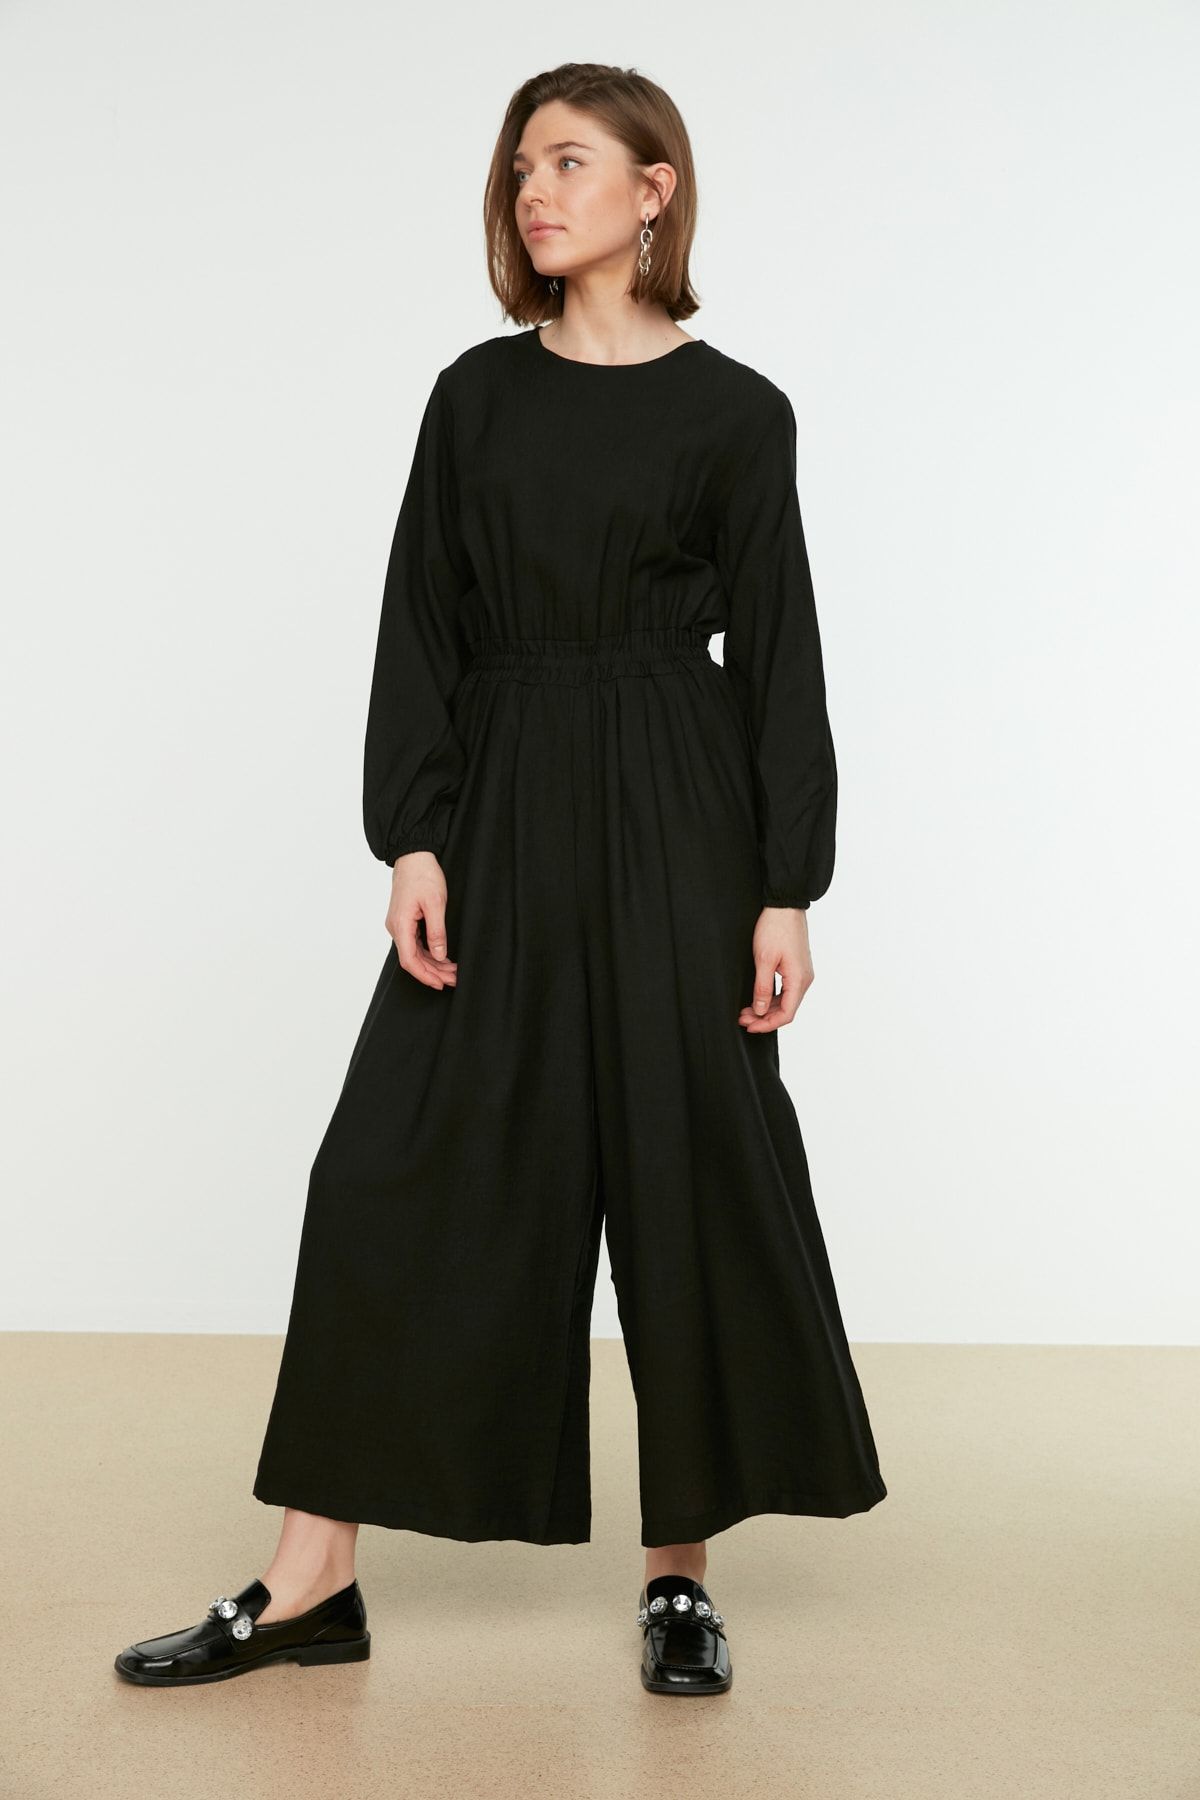 VOLT CLOTHİNG Women's Black Pocket Strap Casual Flowy Jumpsuit - Trendyol